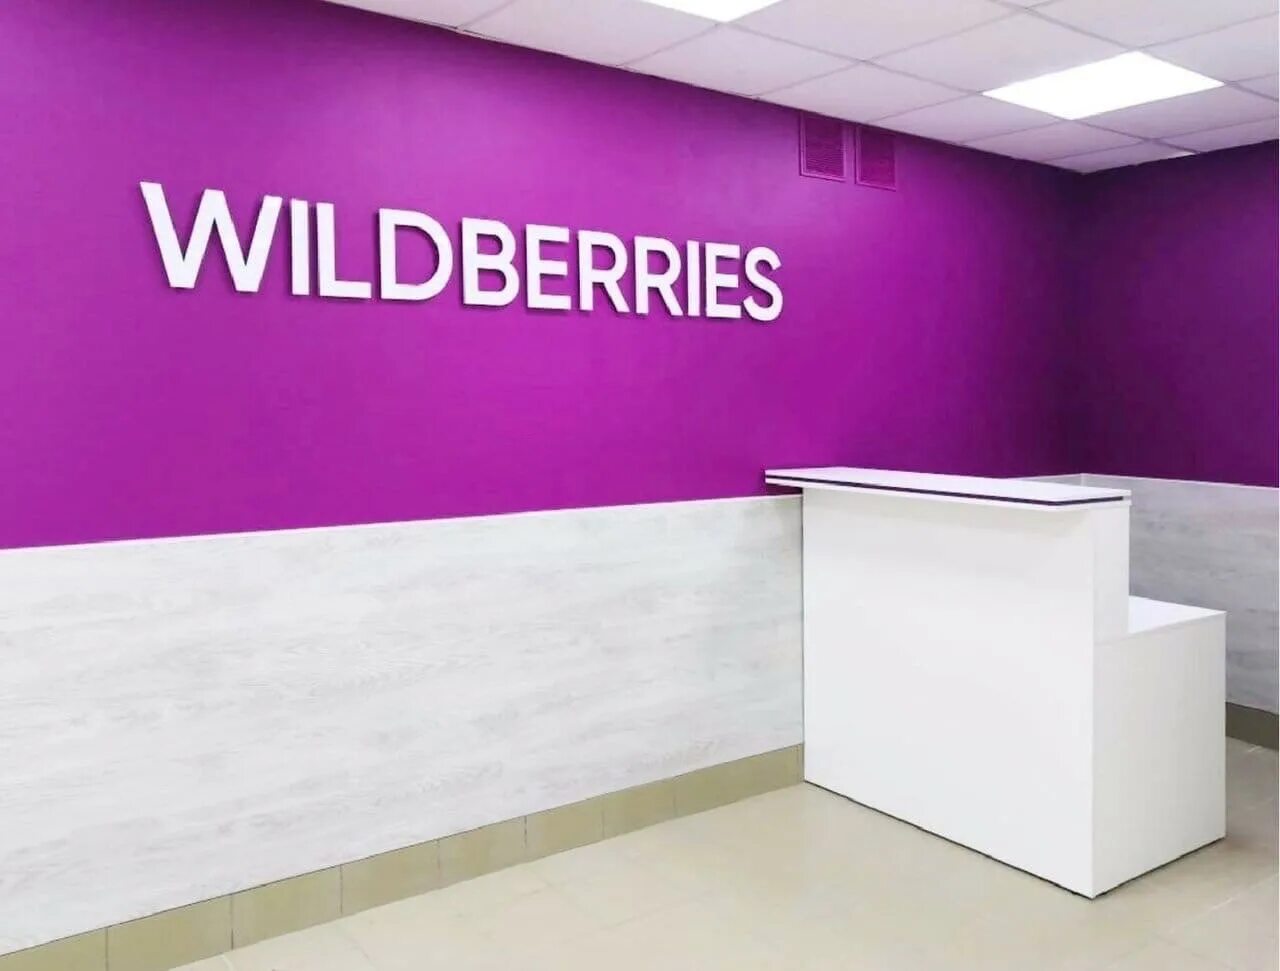 Wildberries. Пункт Wildberries. Wildberries логотип. Wildberries Фоновое изображение.